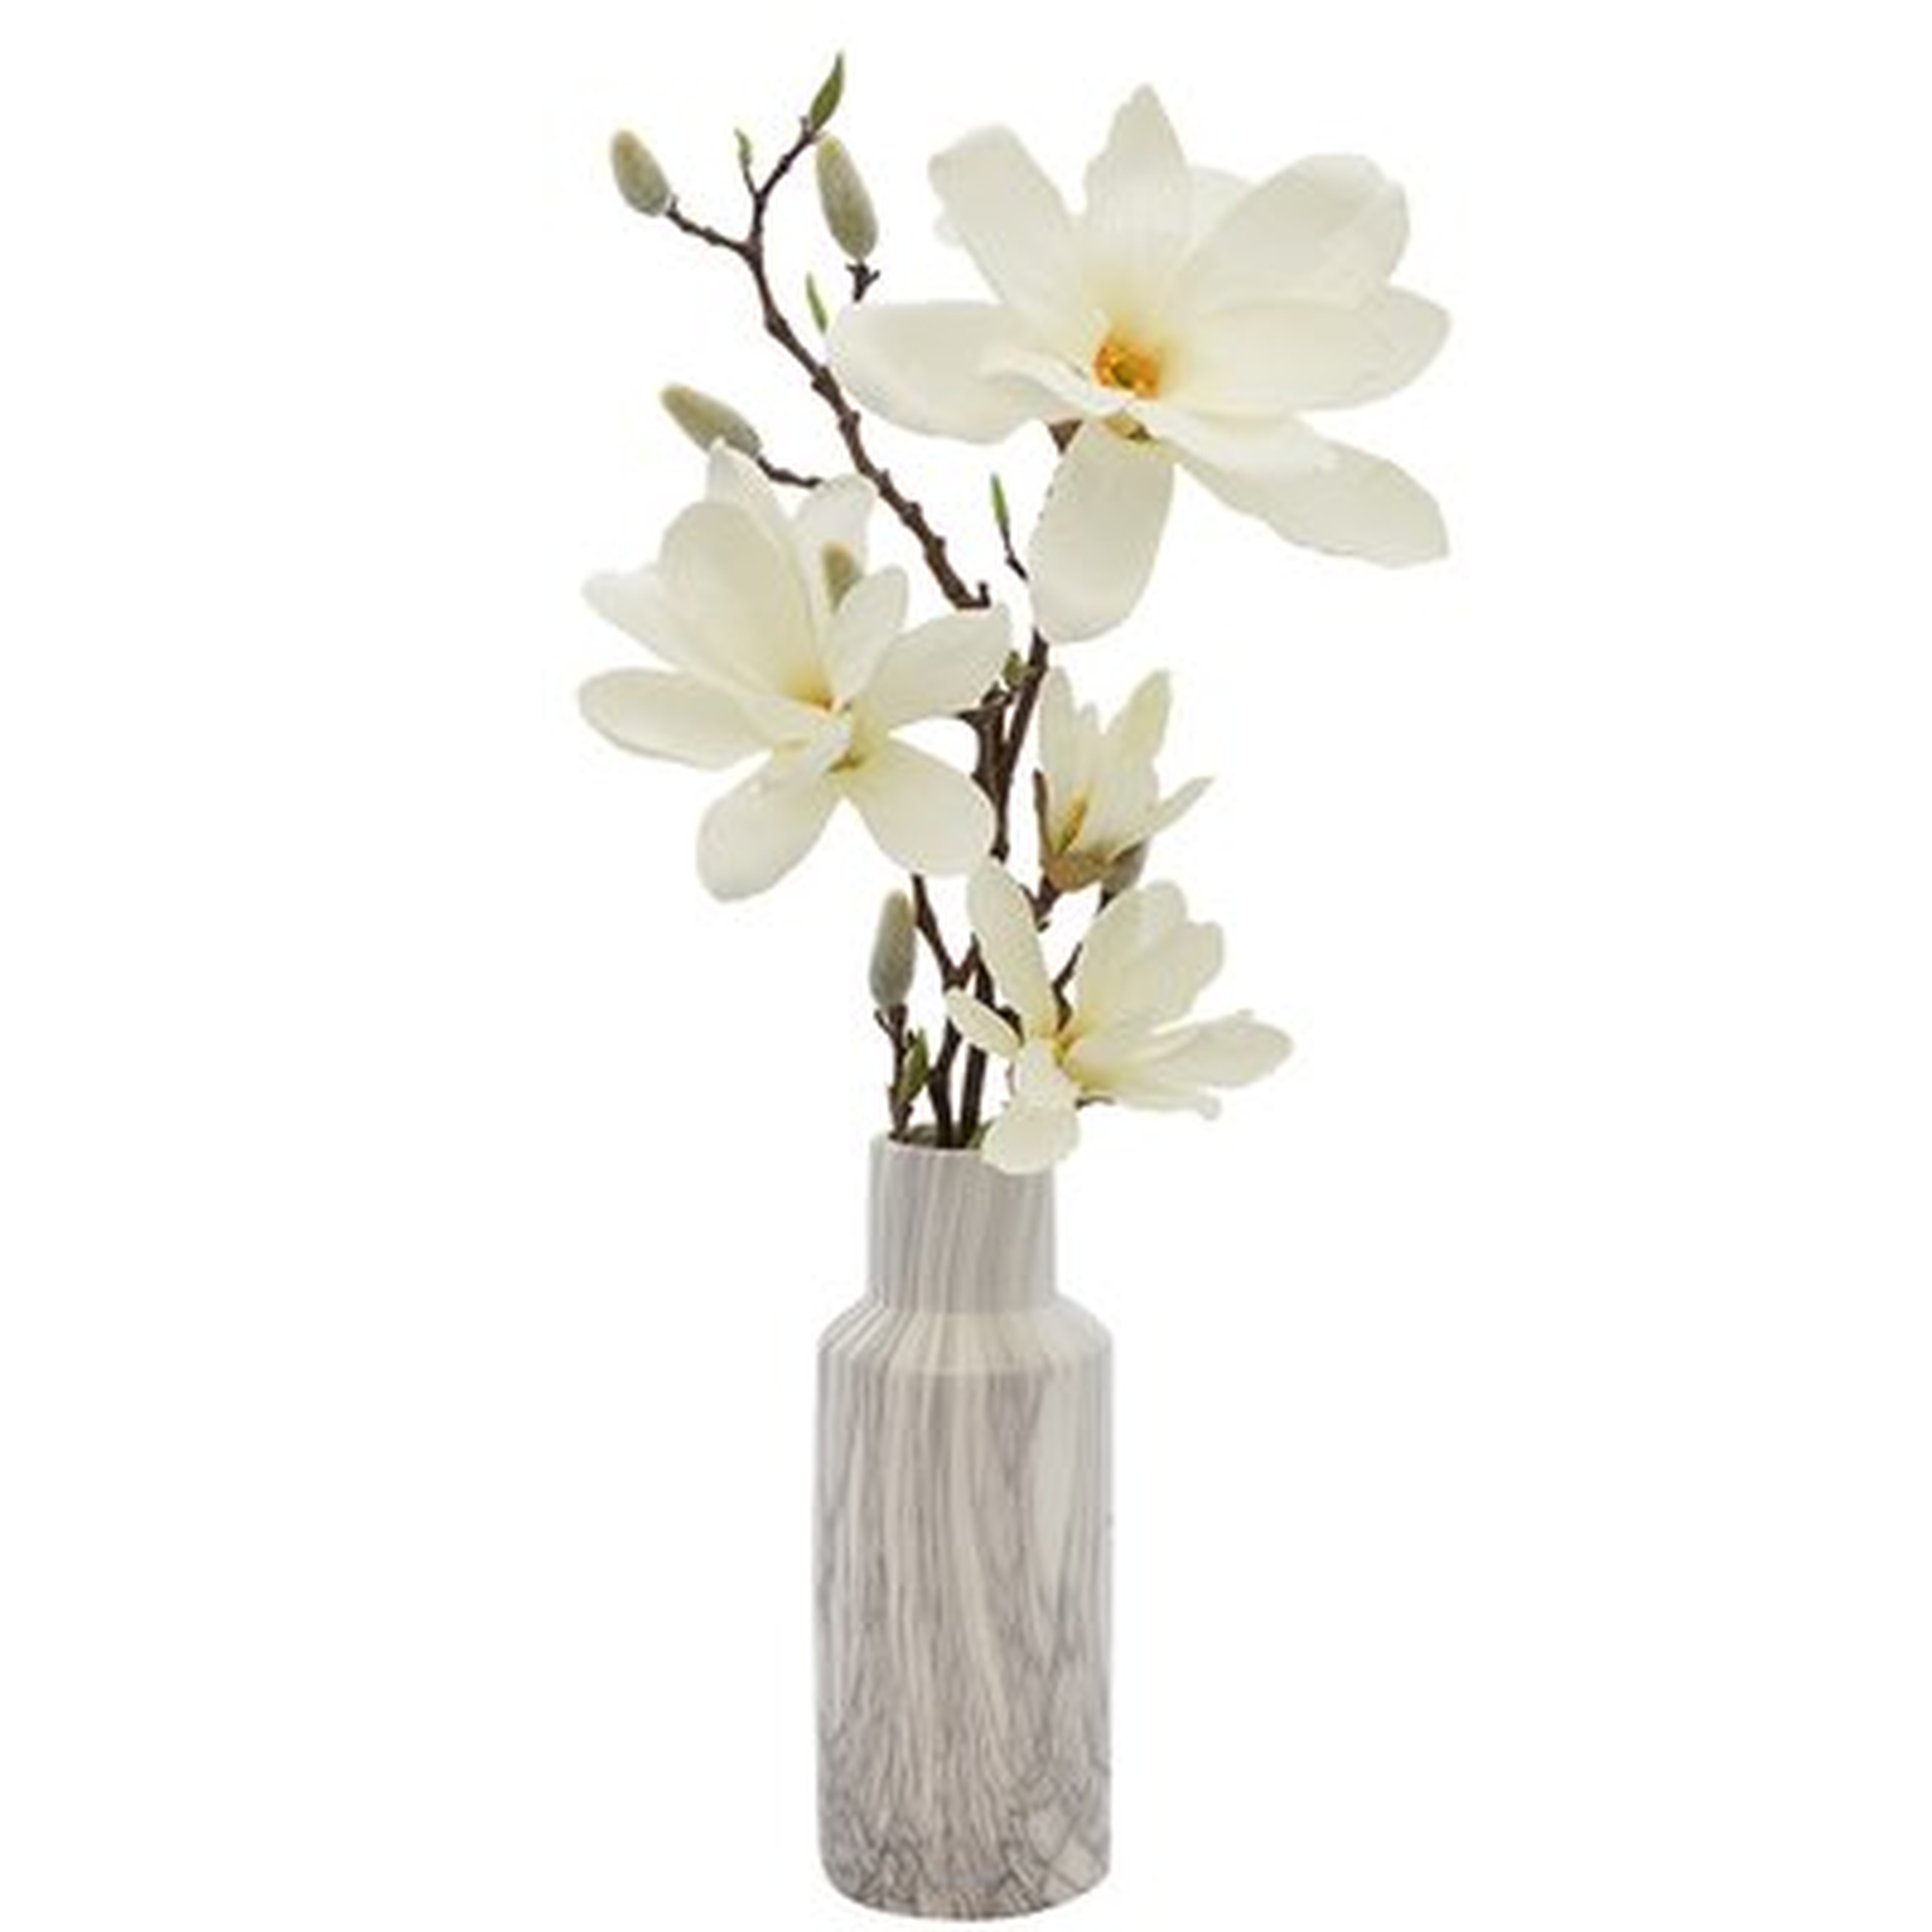 Magnolia Floral Arrangements in Vase - Birch Lane